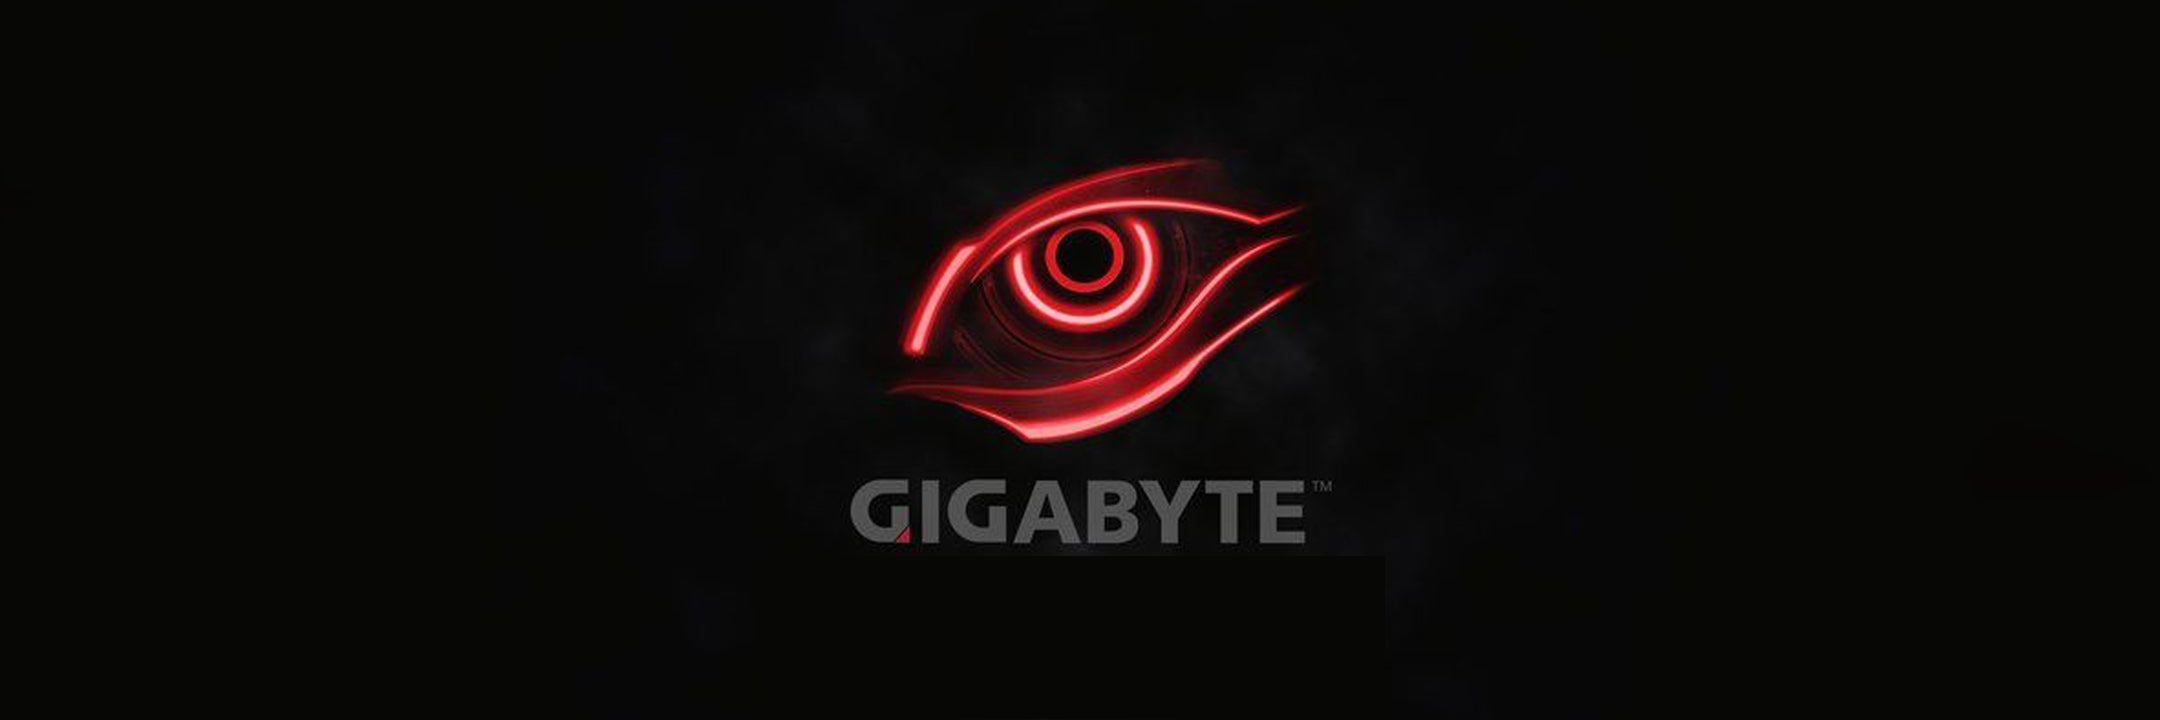 Gigabyte Gaming PC